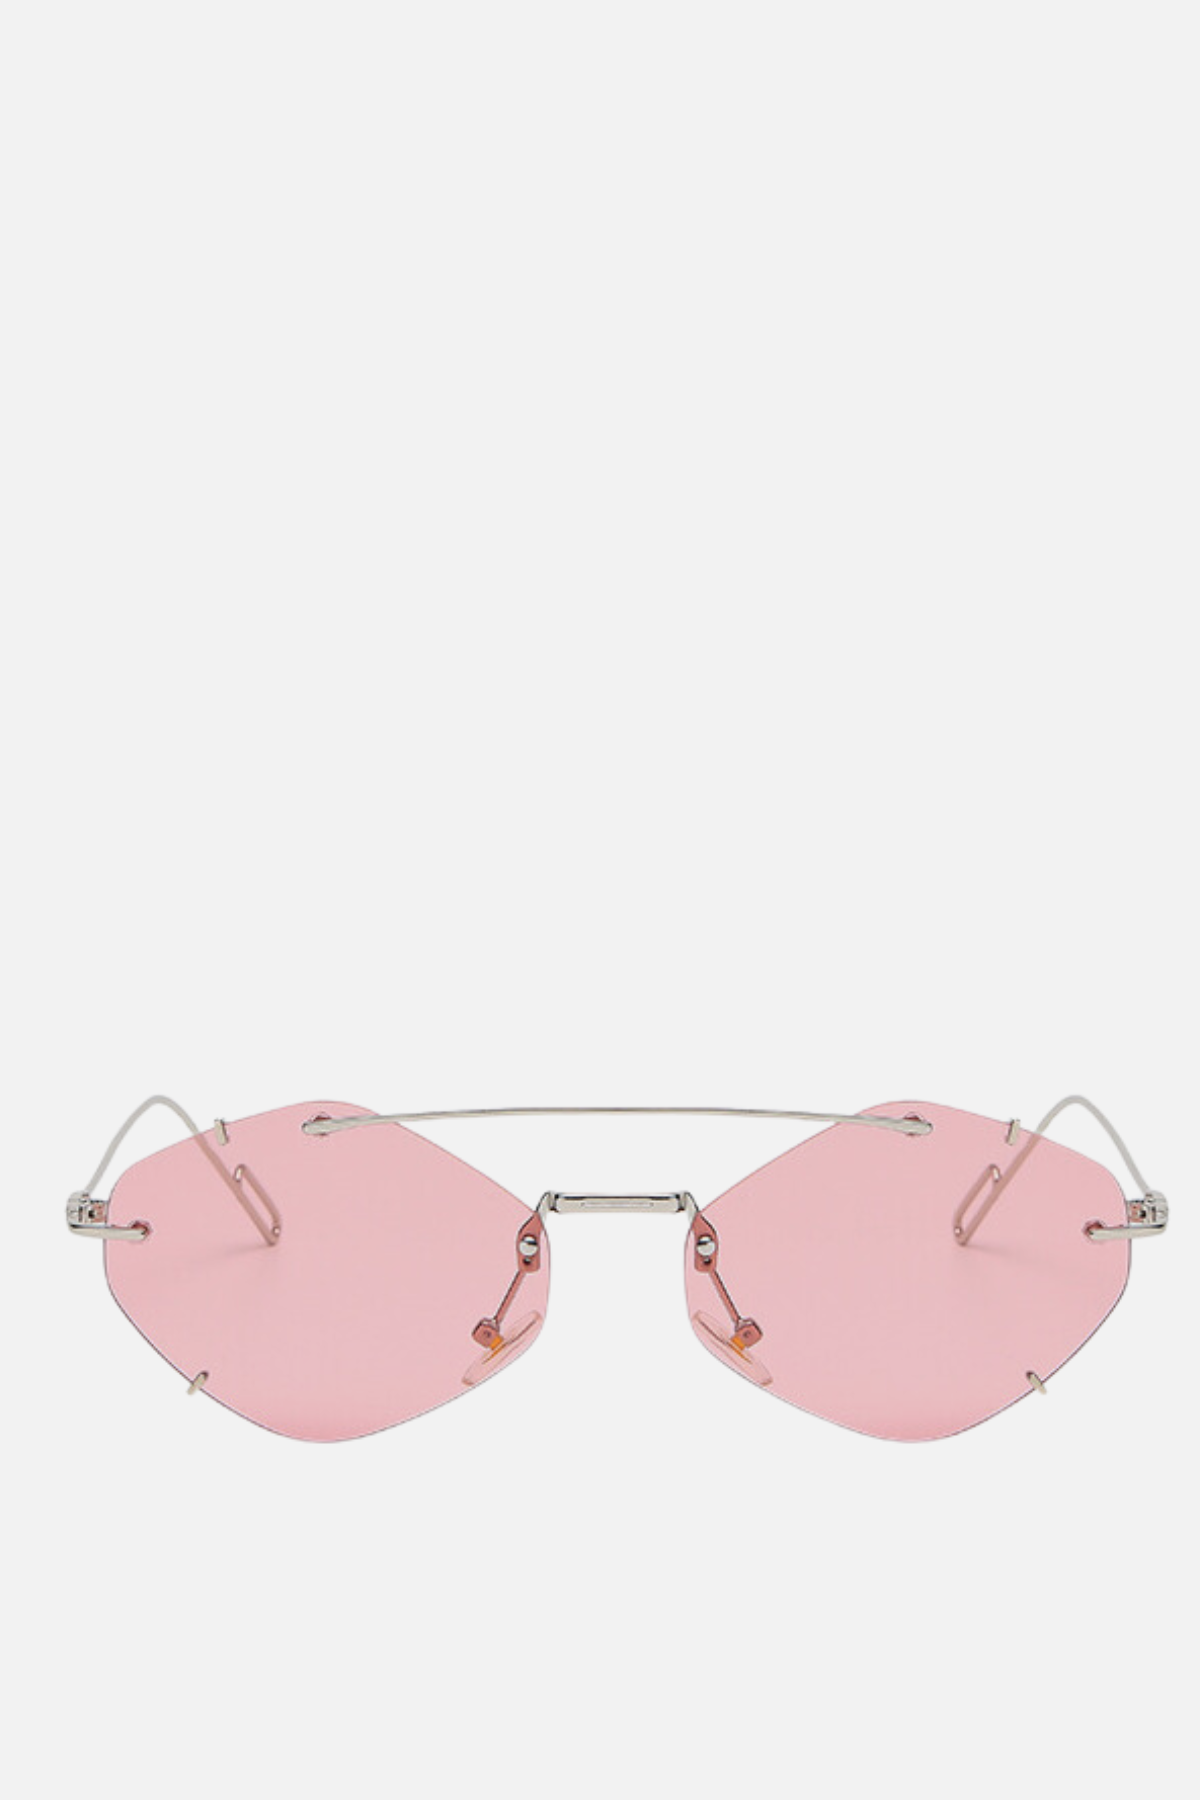 PALMA Hexagon Pink Sunglasses